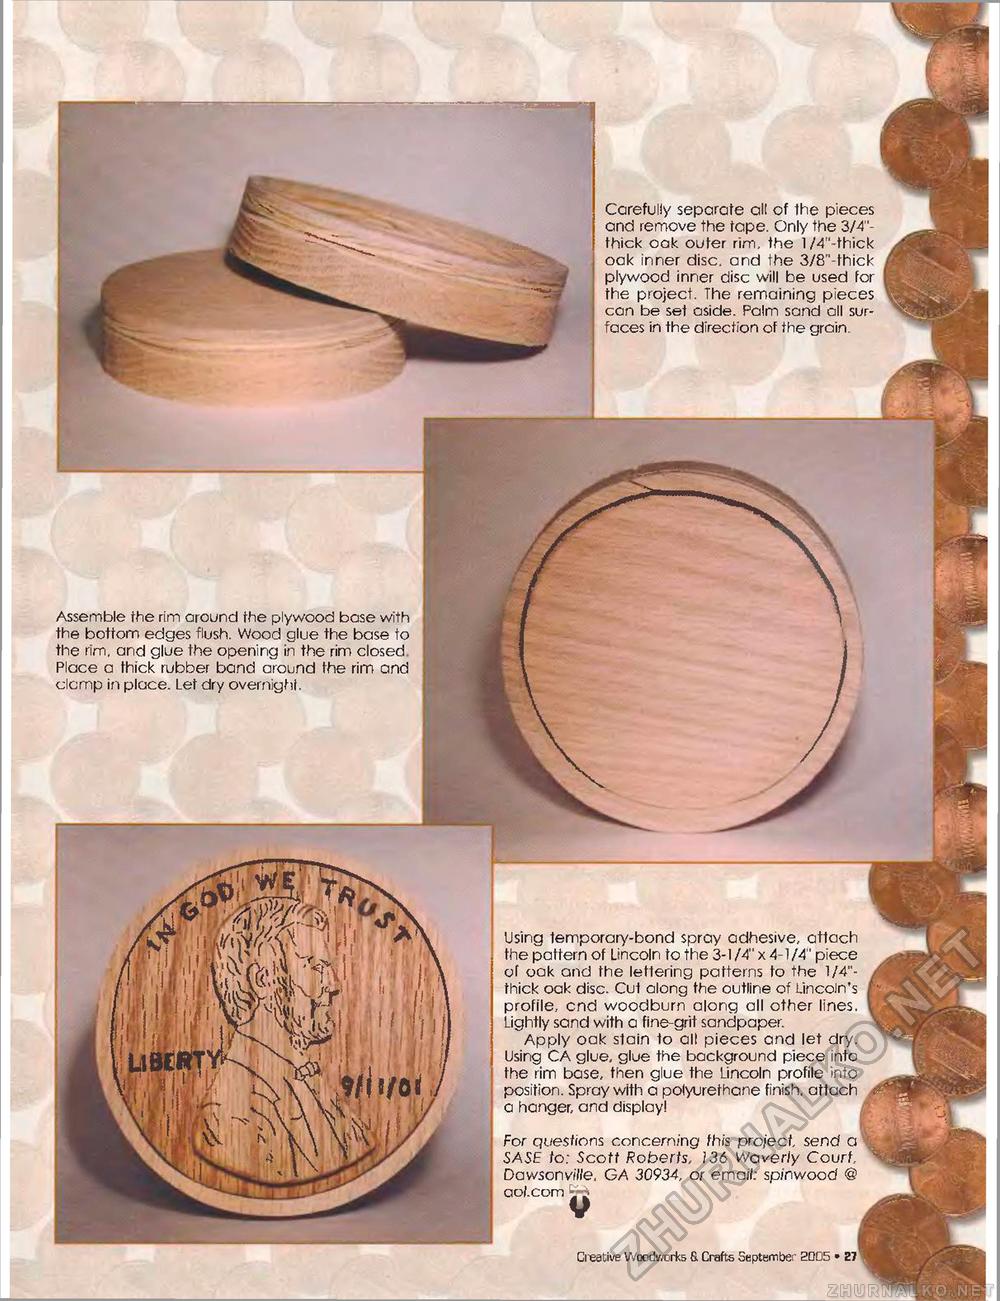 Creative Woodworks & crafts 2005-09,  27